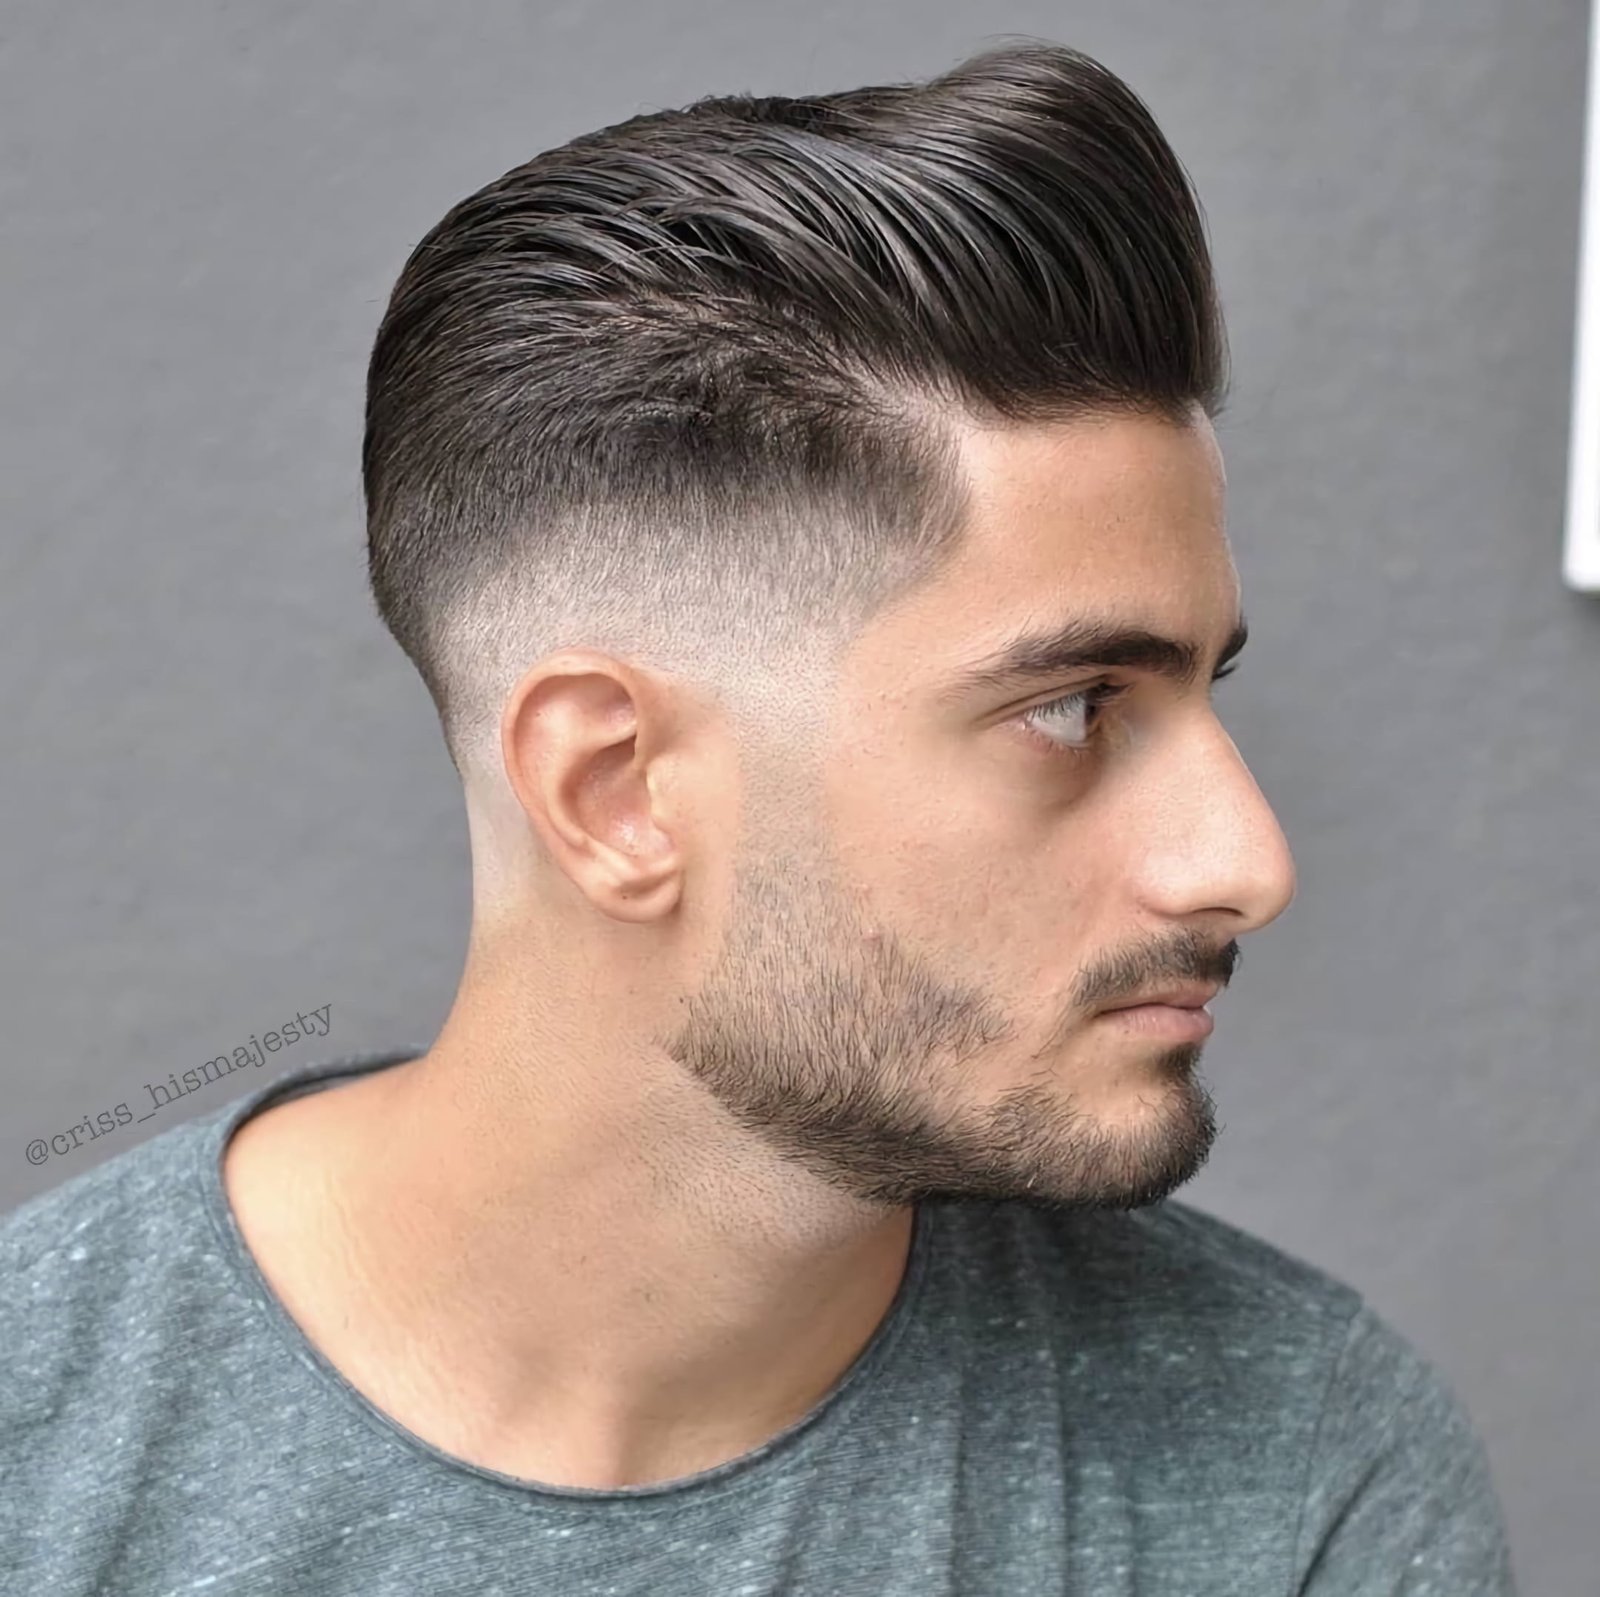 Simple quiff haircut with beard